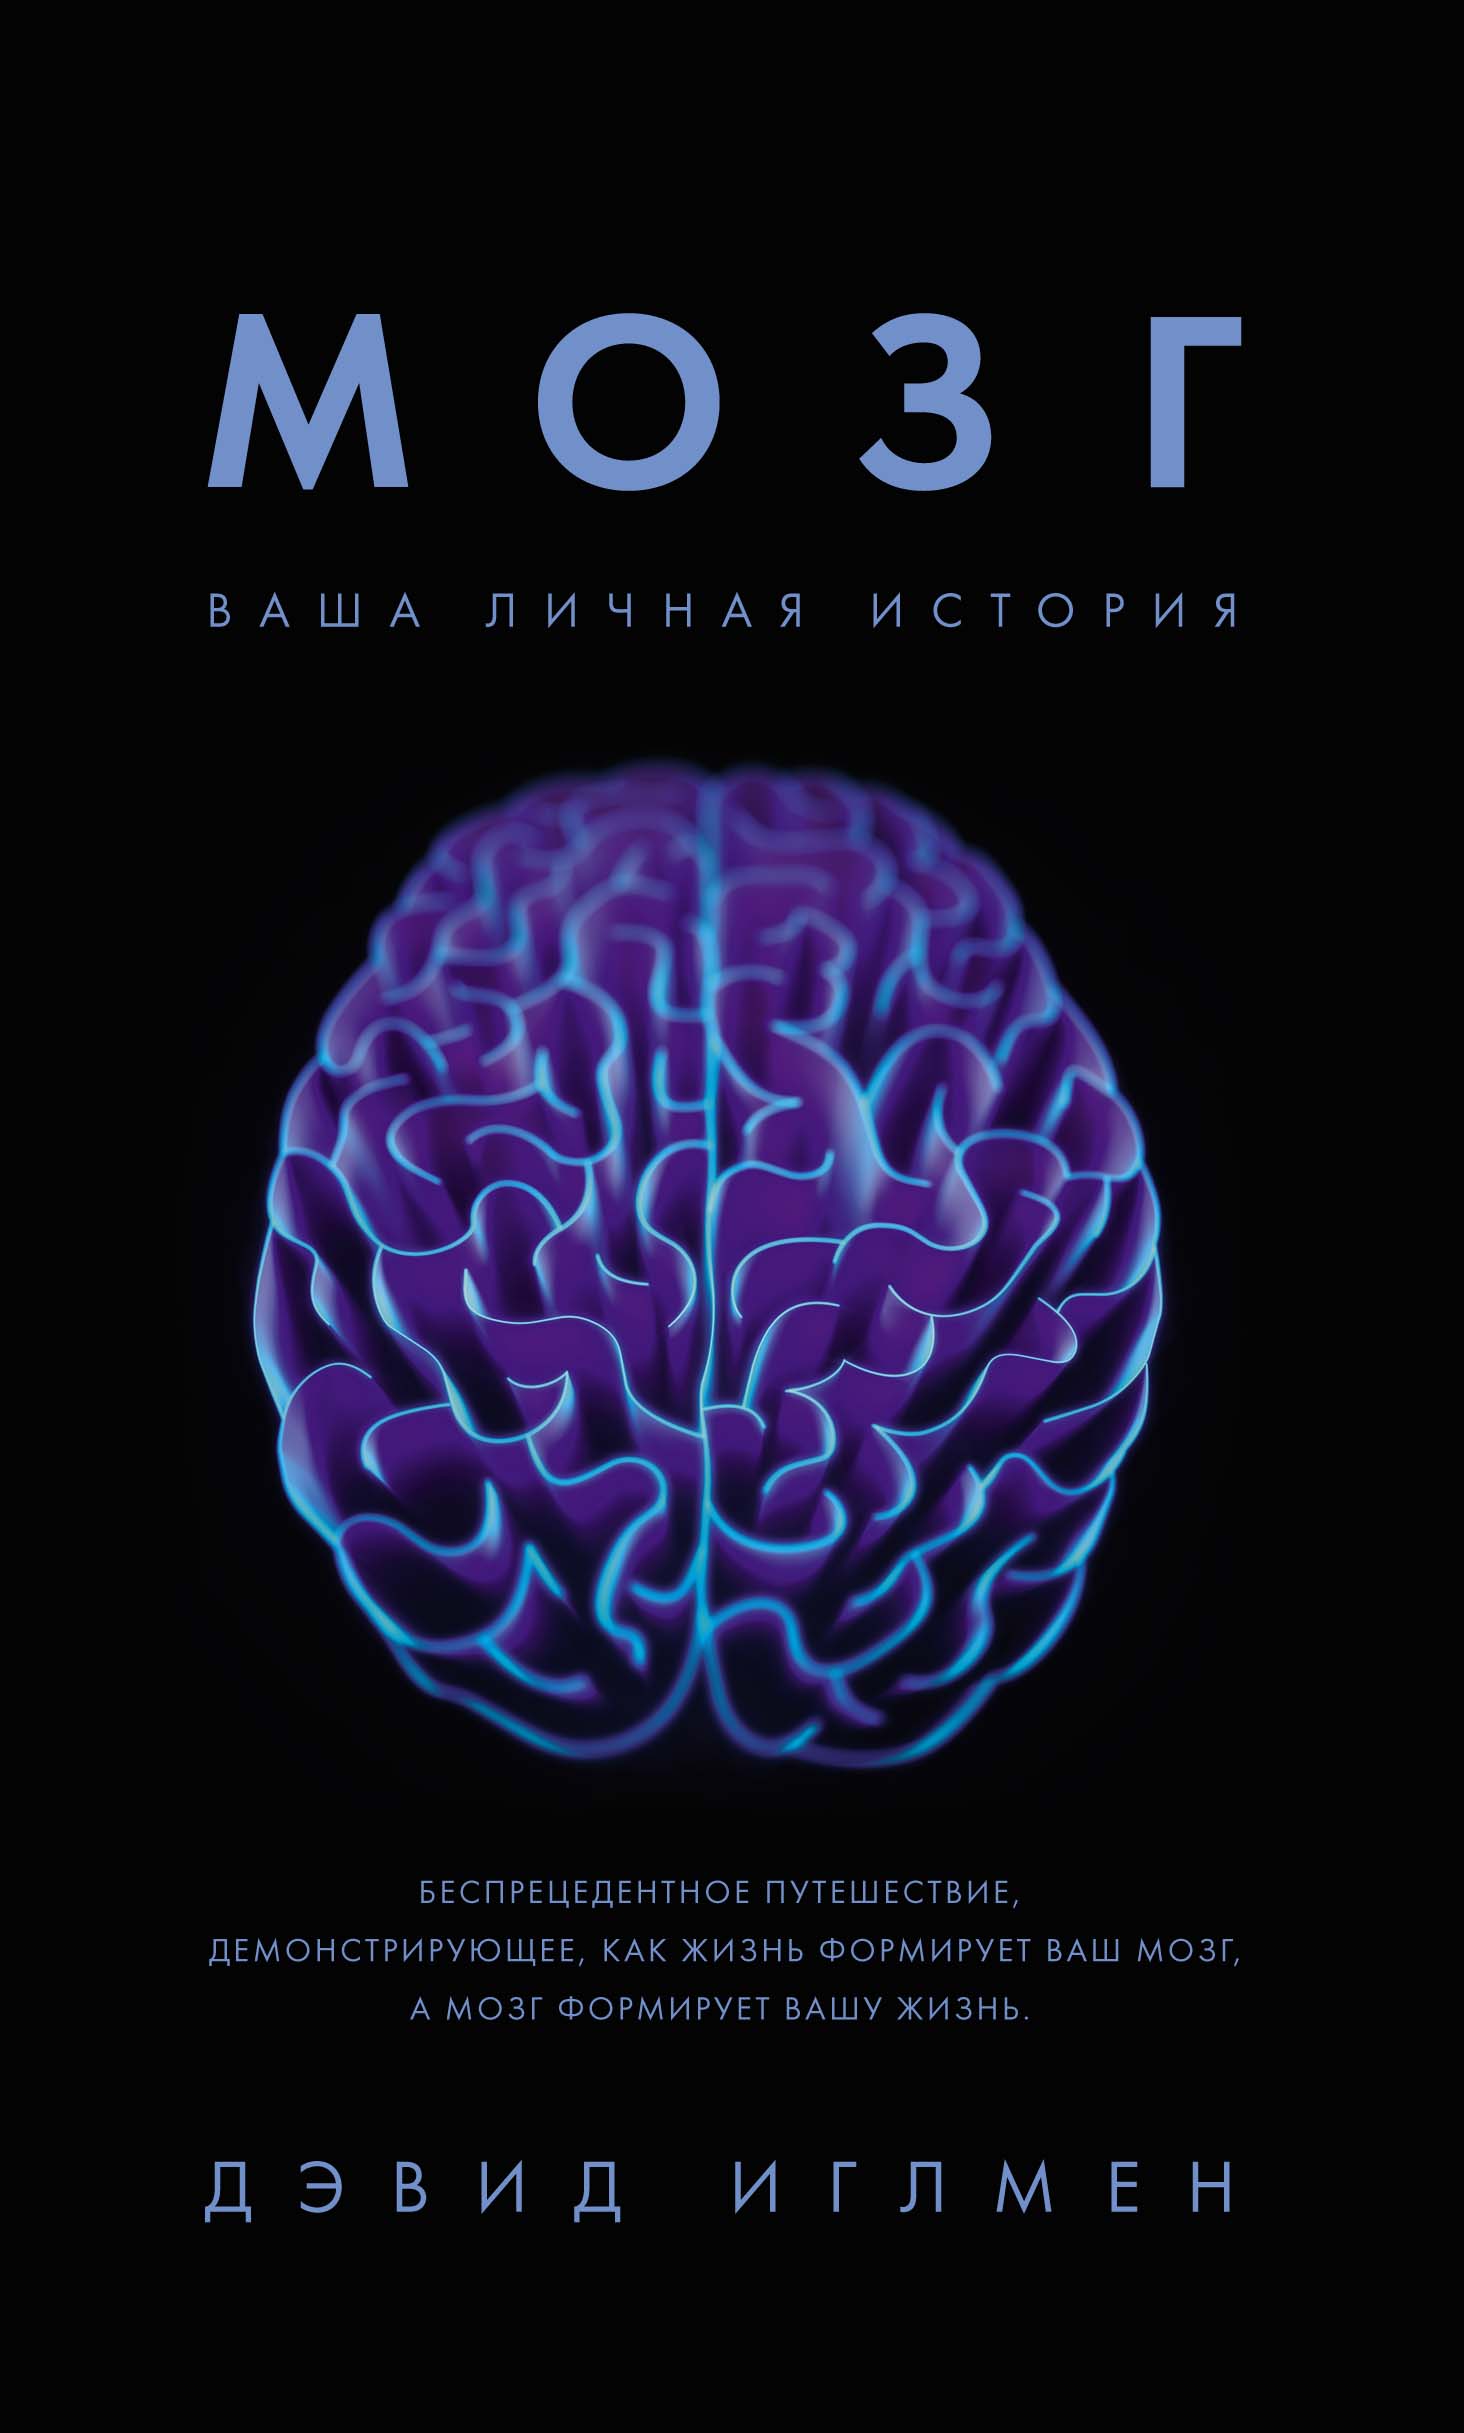 Book brain. Дэвид Иглмен мозг. Мозг книга Дэвид Иглман. Дэвид Иглмен мозг ваша личная история. Мозг с книжкой.